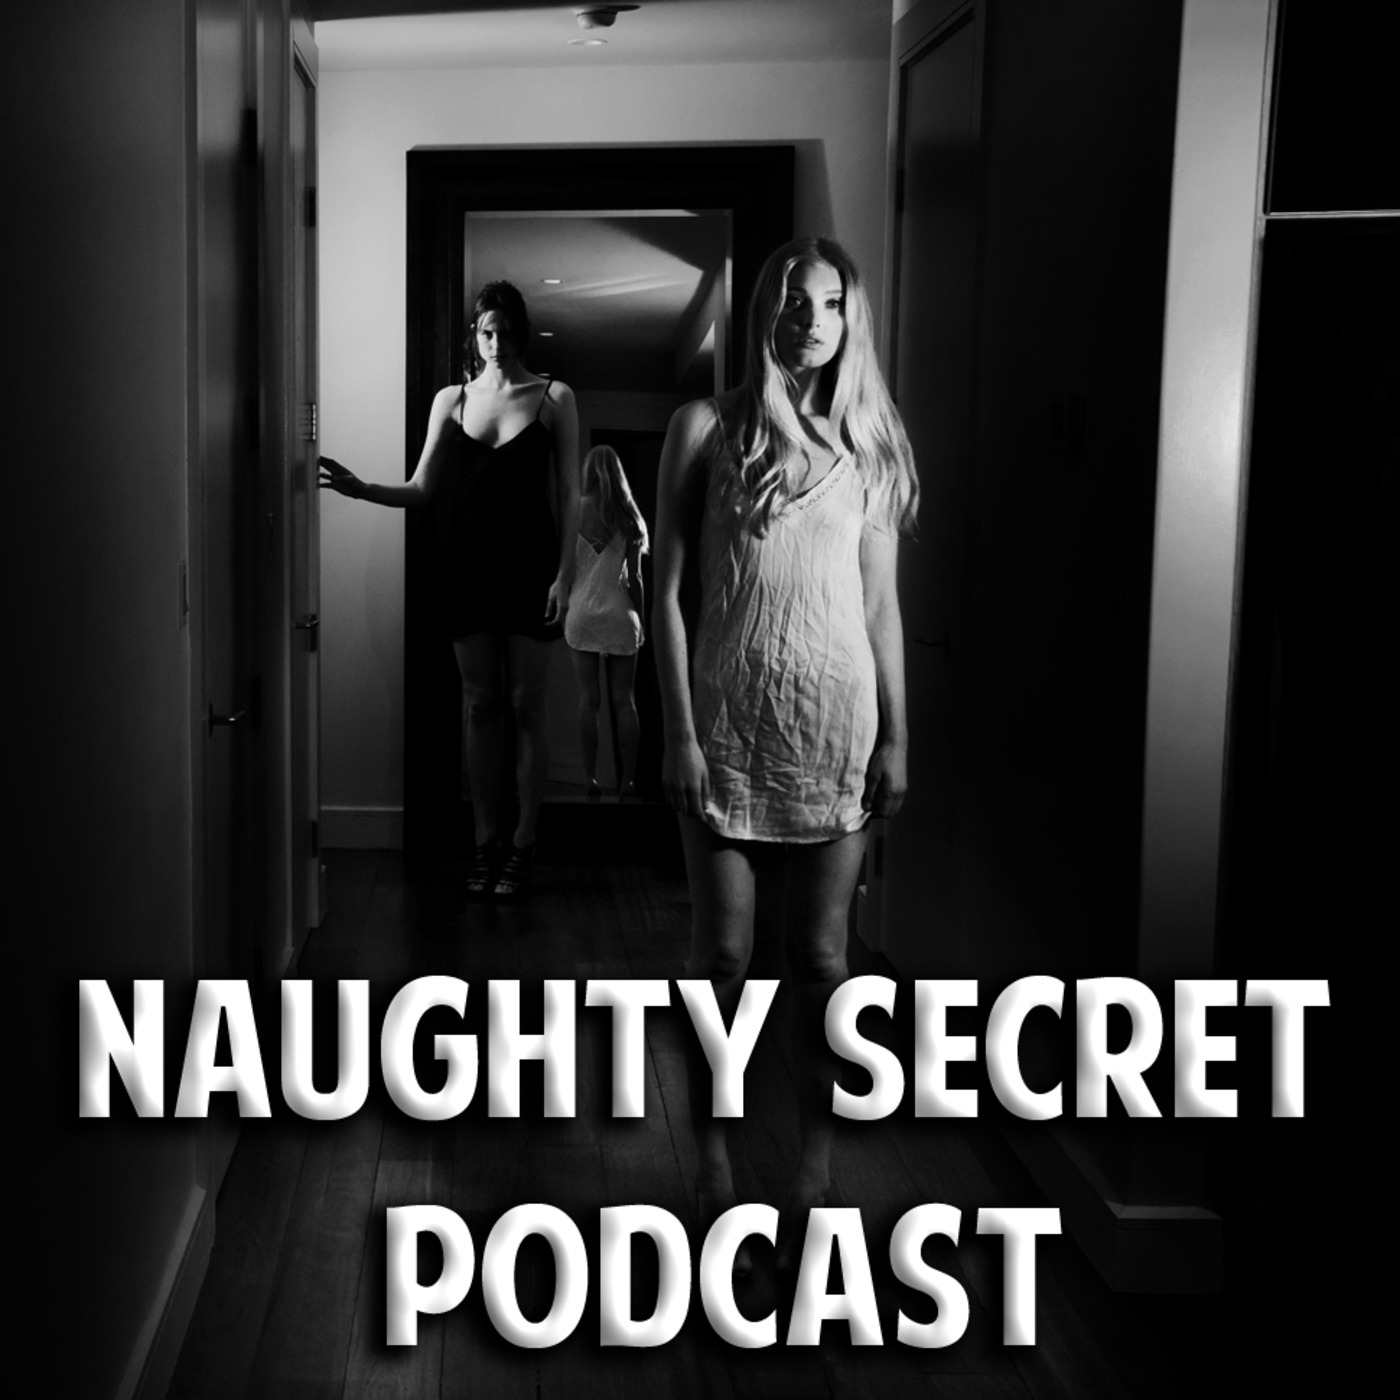 Naughty Secret Podcast Episode 1